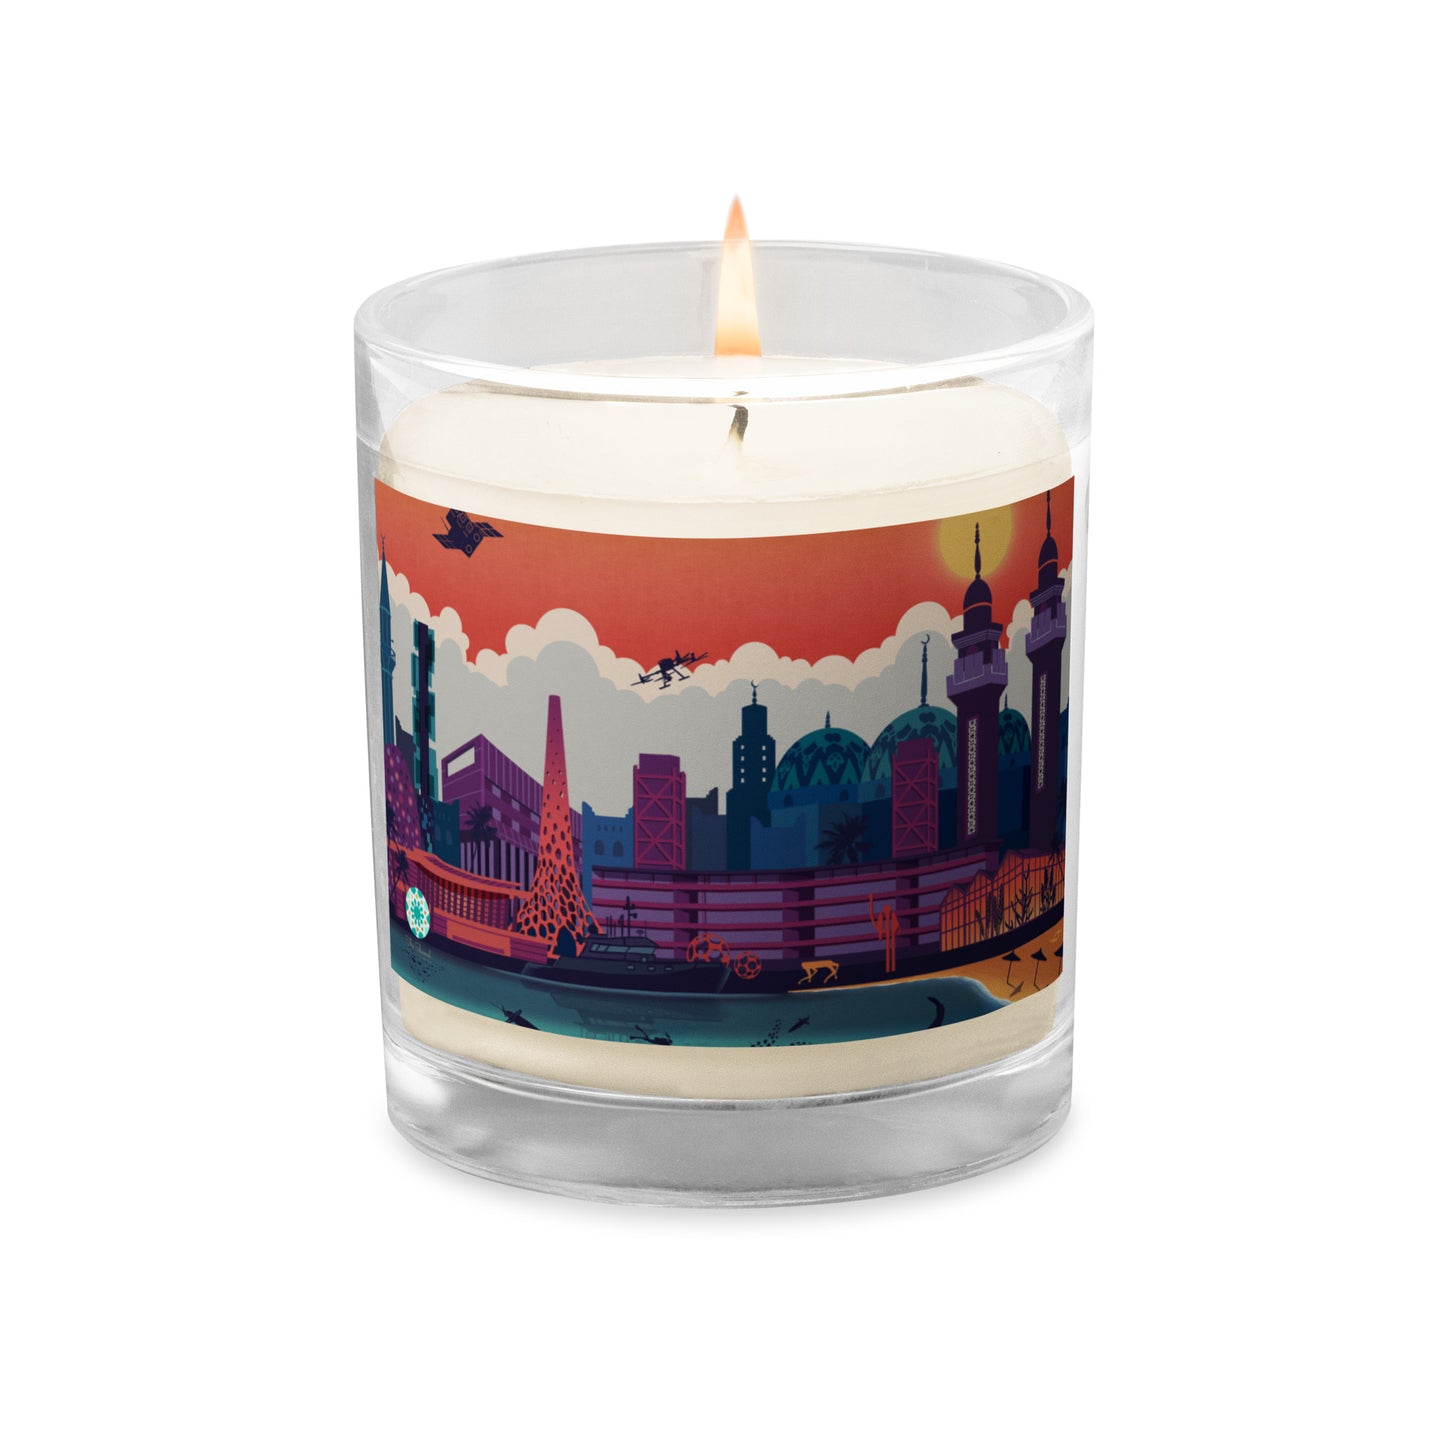 KAUST Skyline Urbanscape soy wax candle